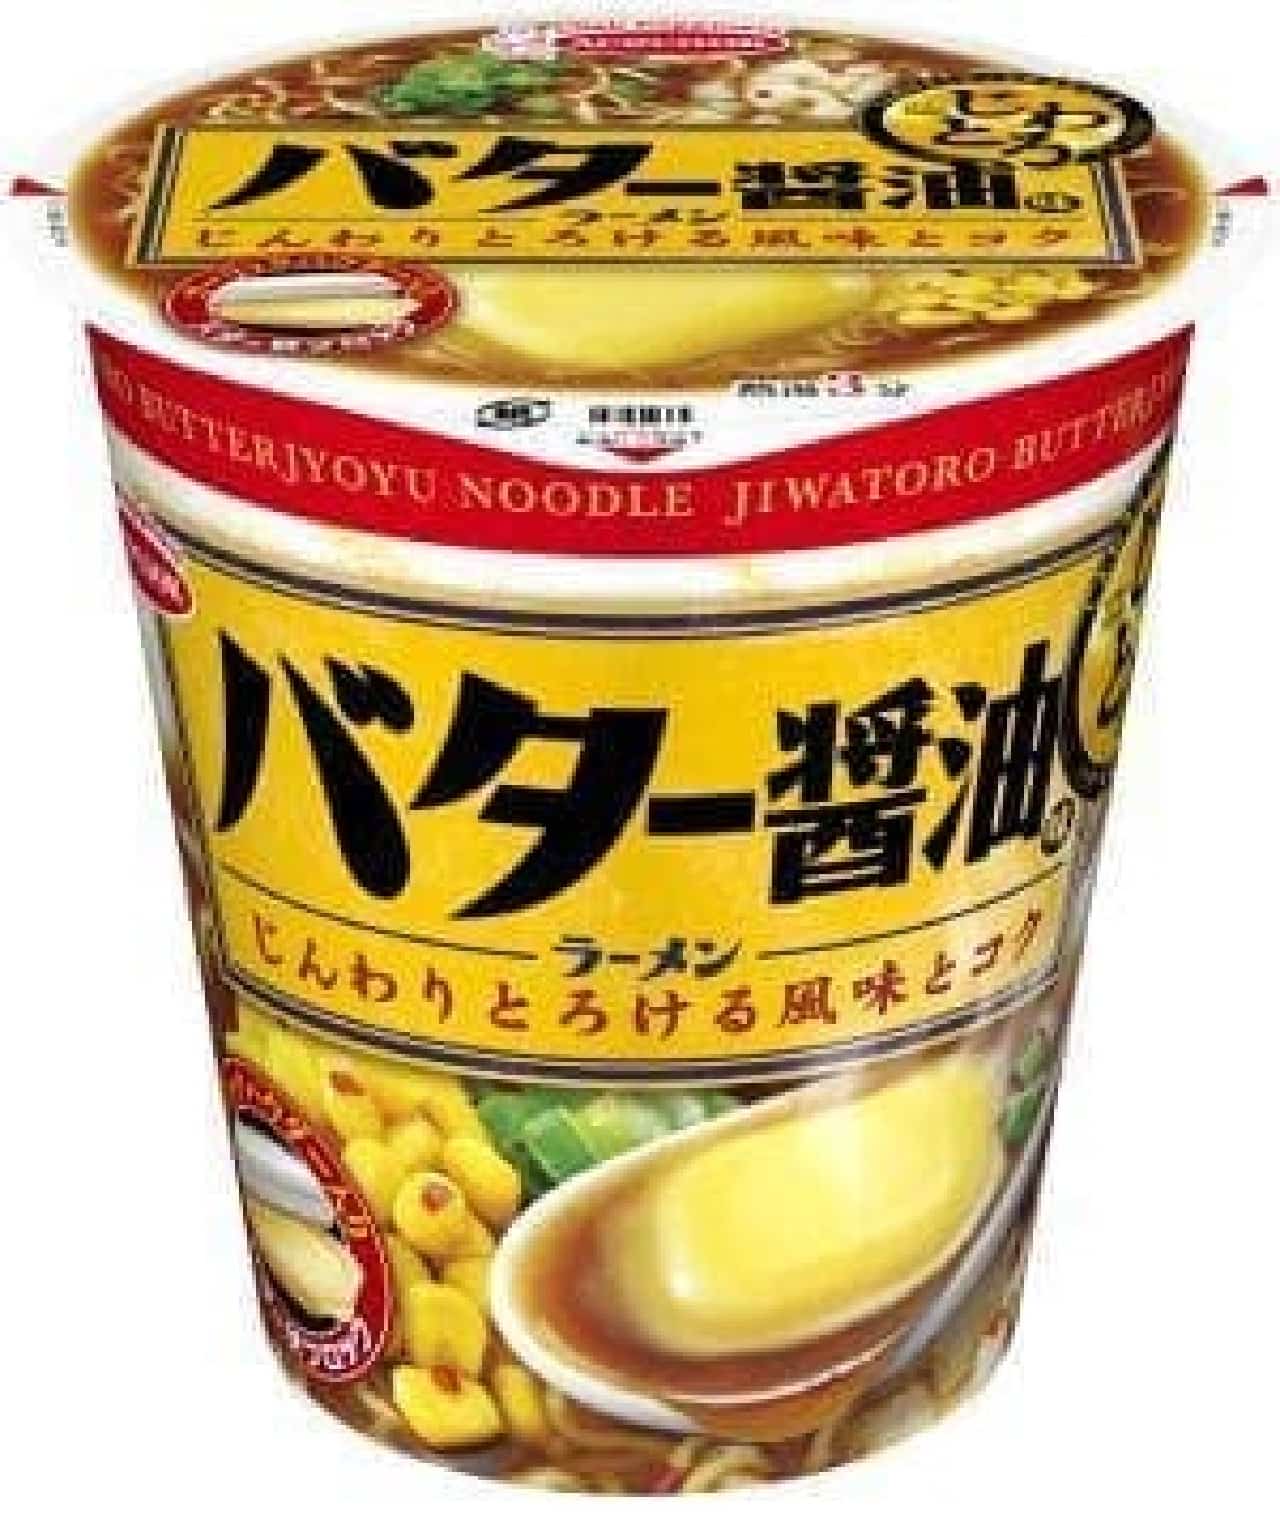 "Jiwatoro butter soy sauce flavored ramen"